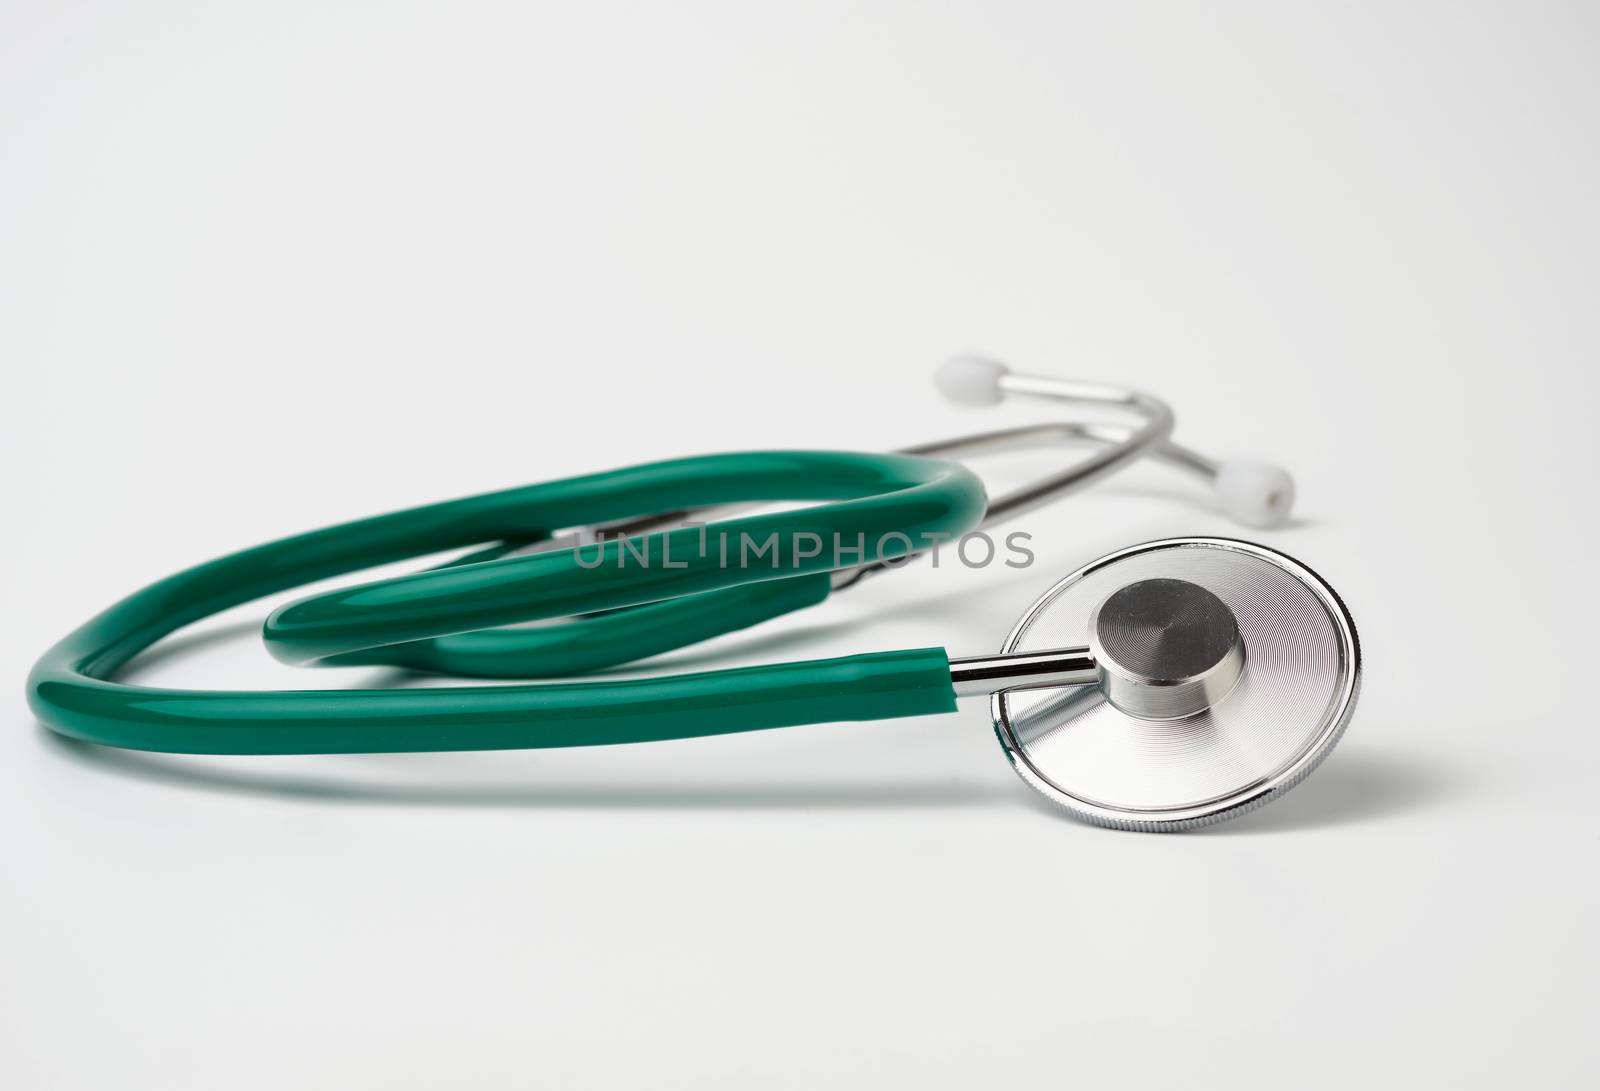 green medical stethoscope on white background, medical item for measurement